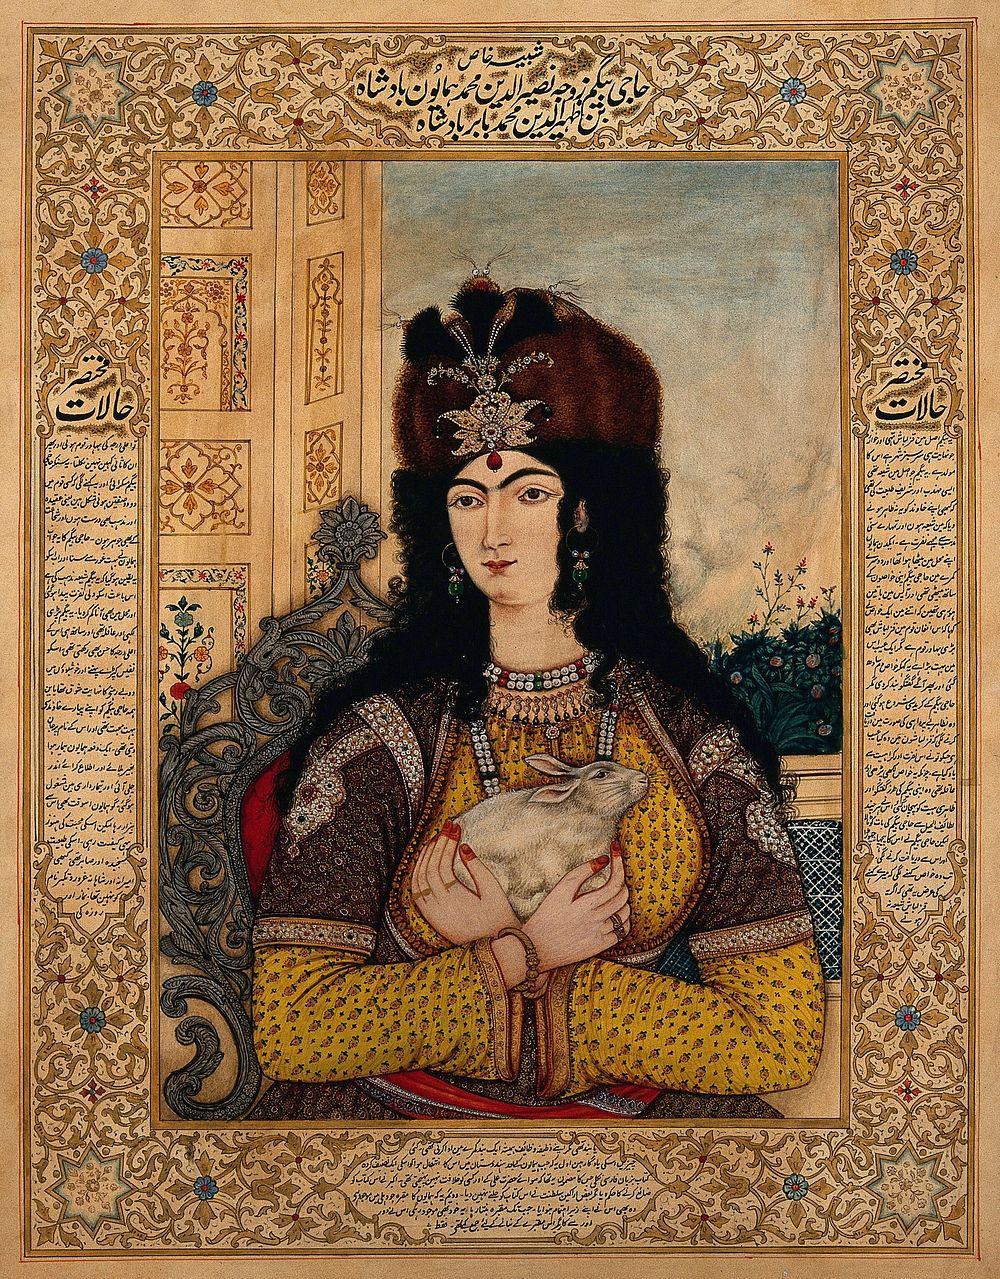 Badshah Humayun's Begum holding a rabbit. Gouache painting by an Indian painter.